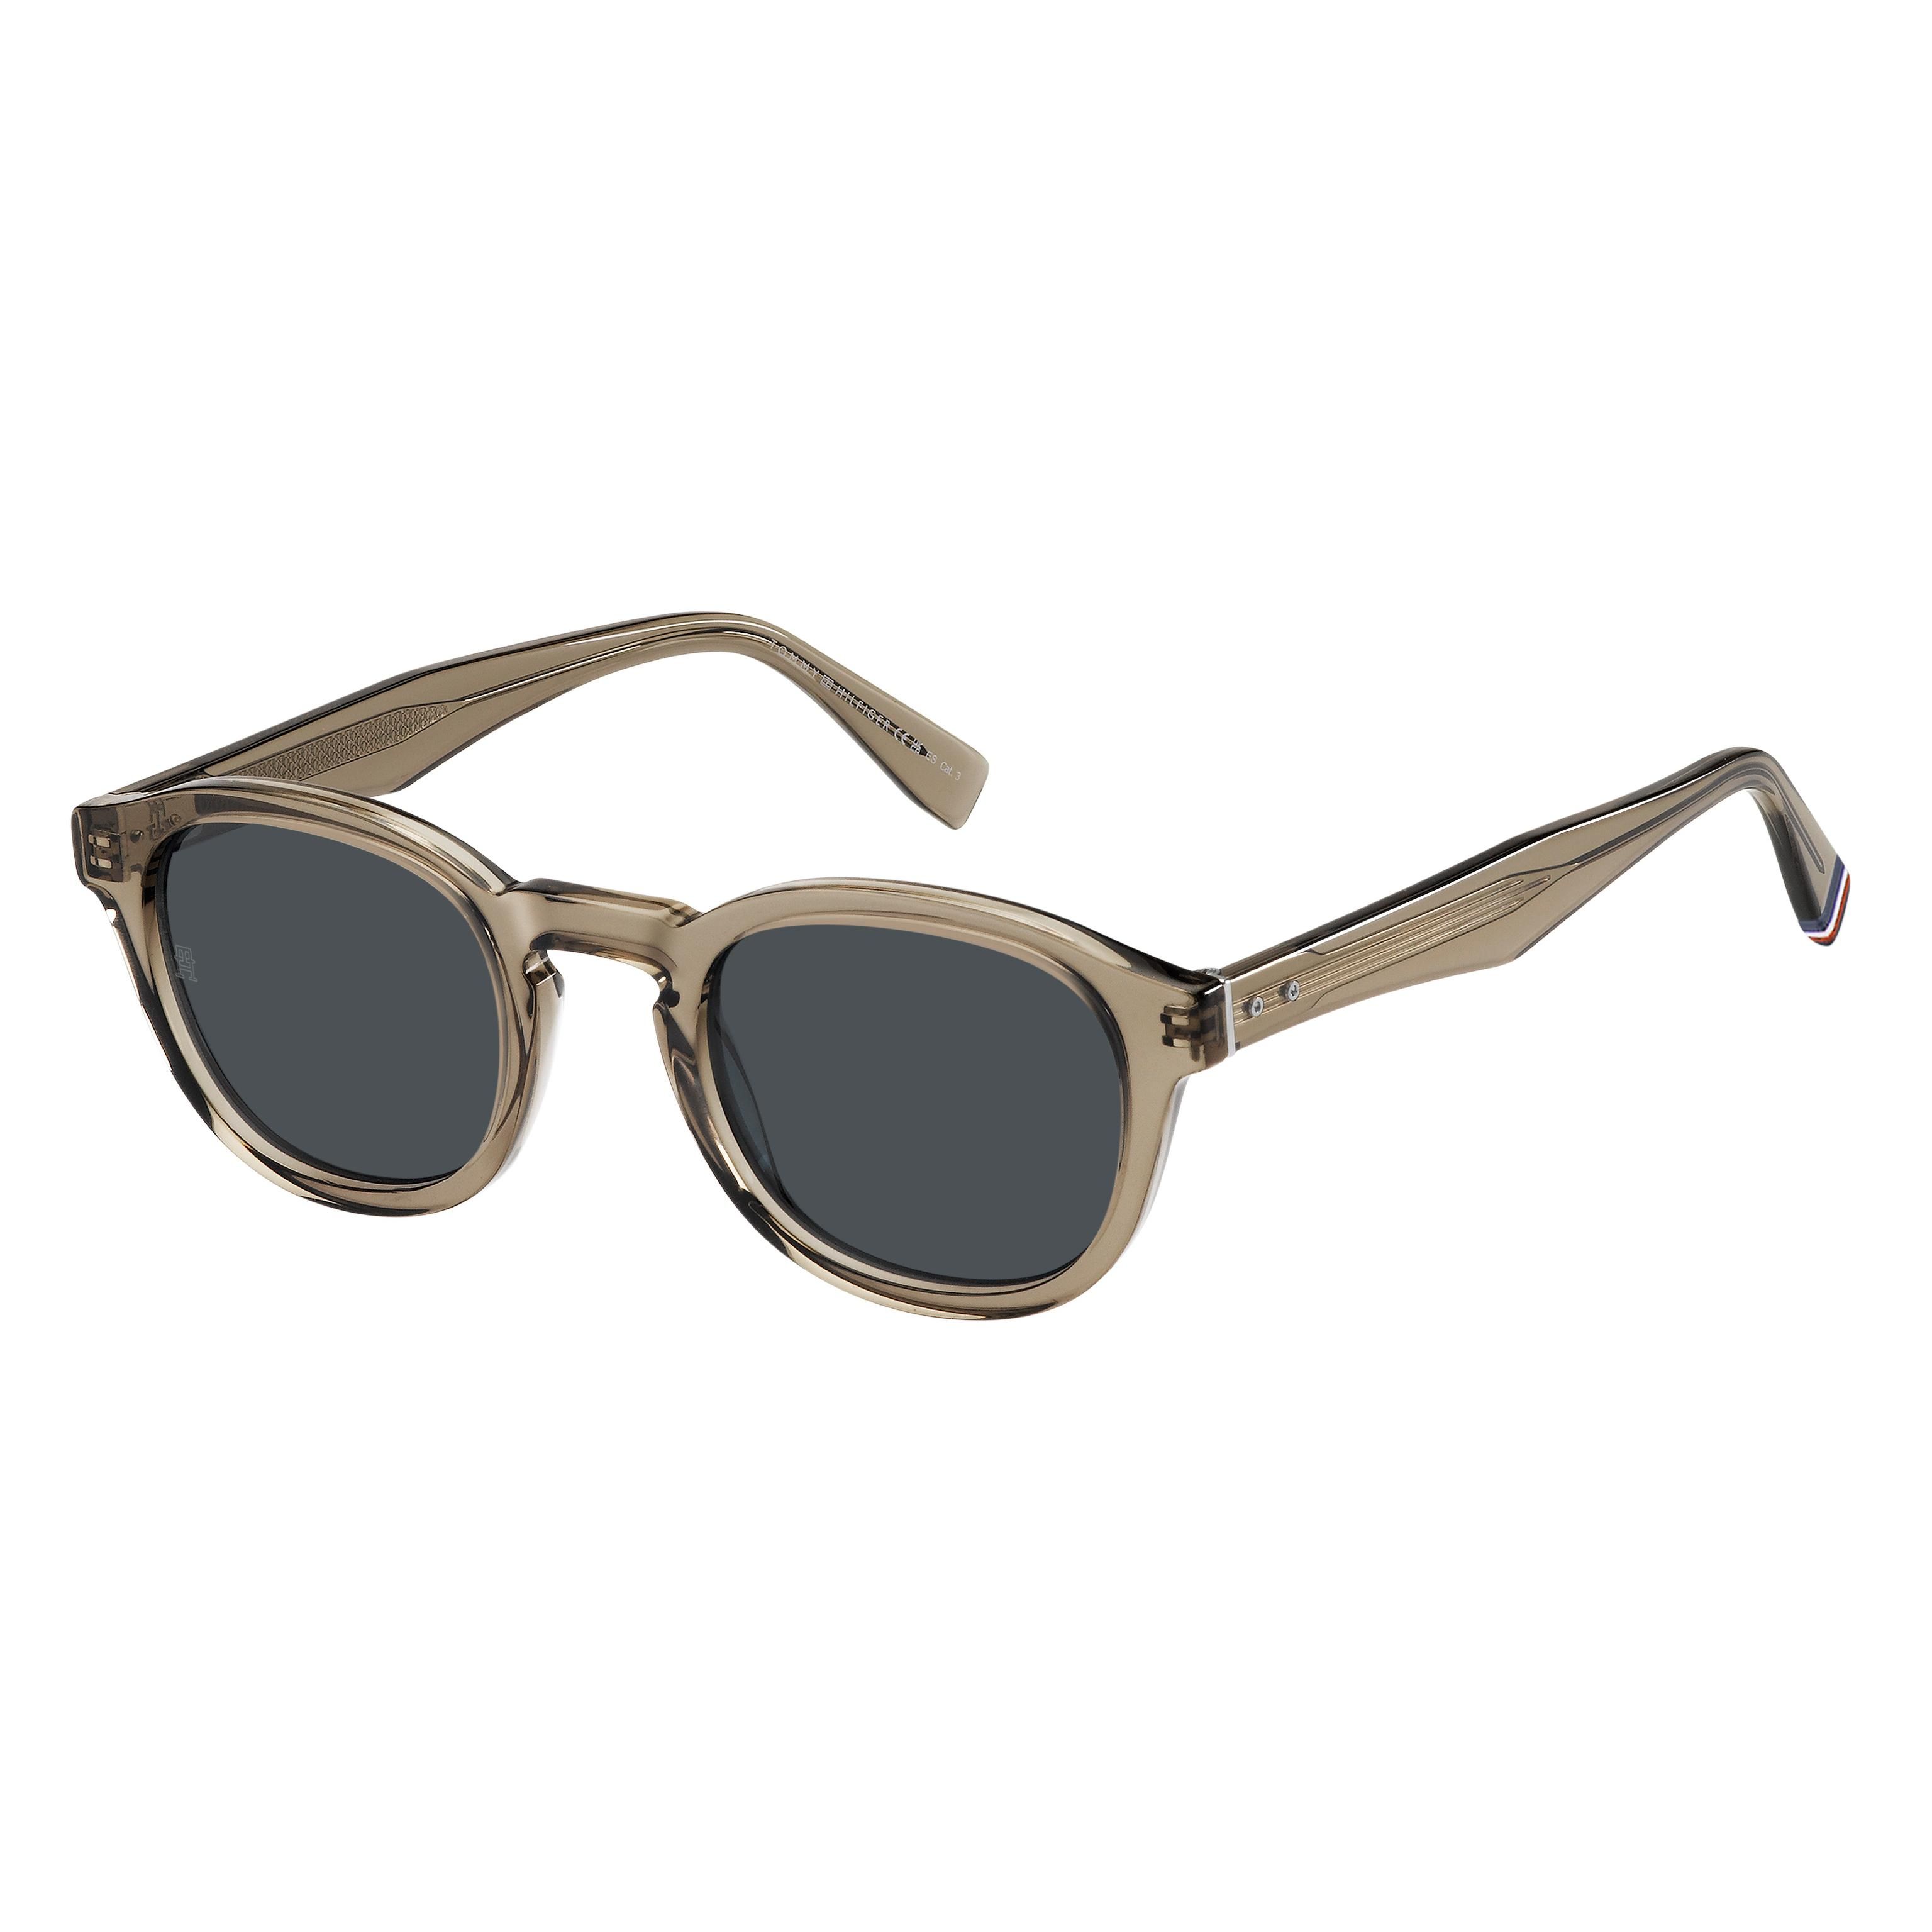 TH 2031 S Panthos Sunglasses 10A - size 49